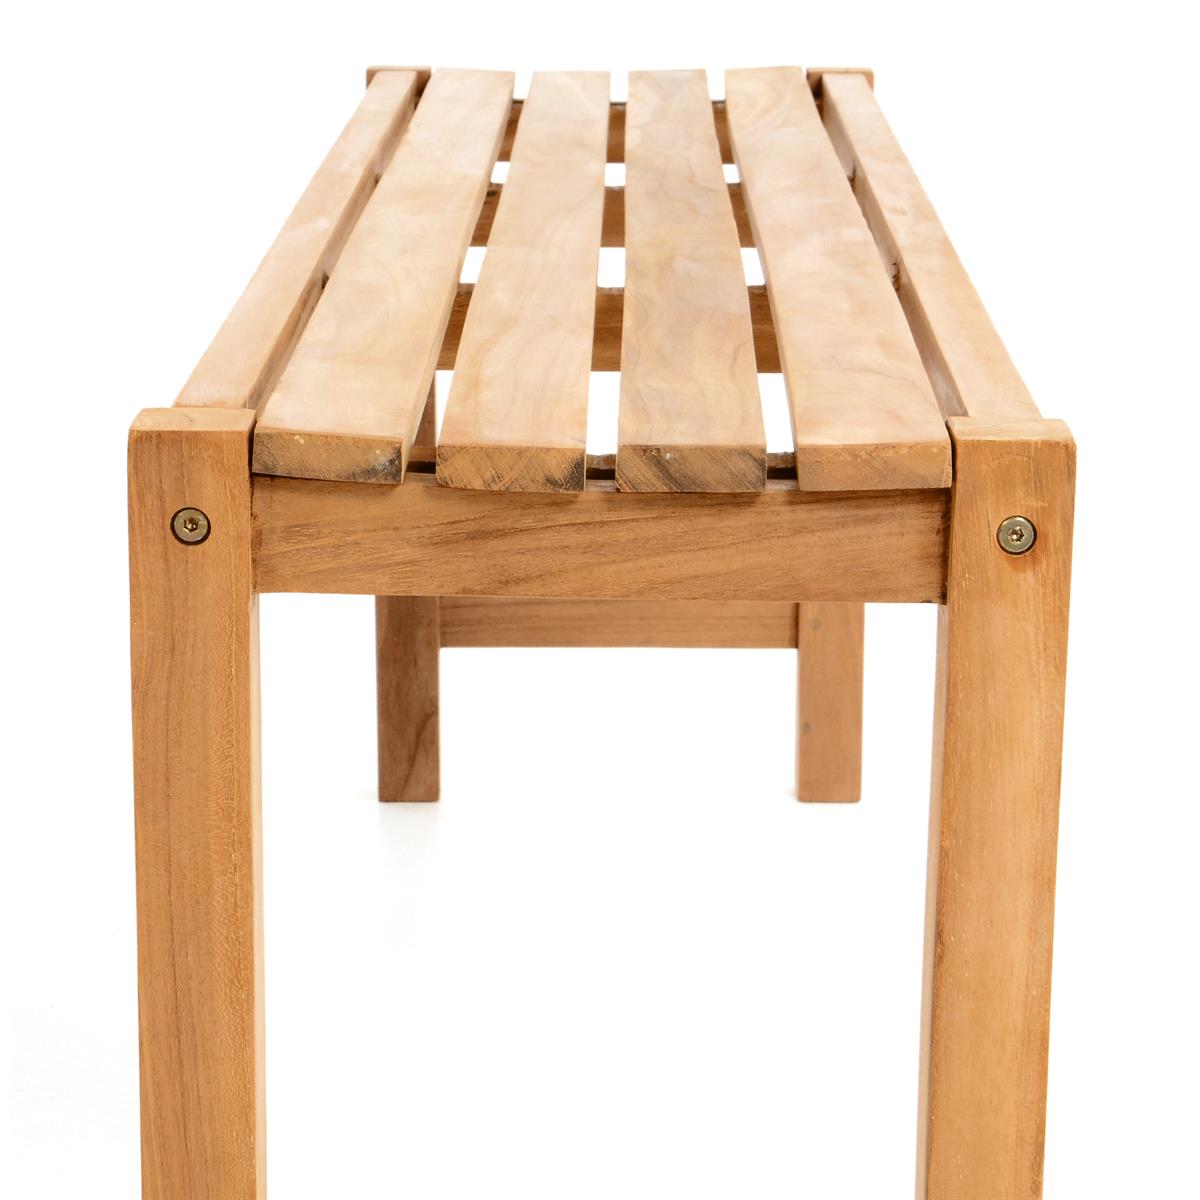 DIVERO Gartenmöbelset Picknickset Sitzgruppe Teakholz Bank Tisch behandelt 135cm